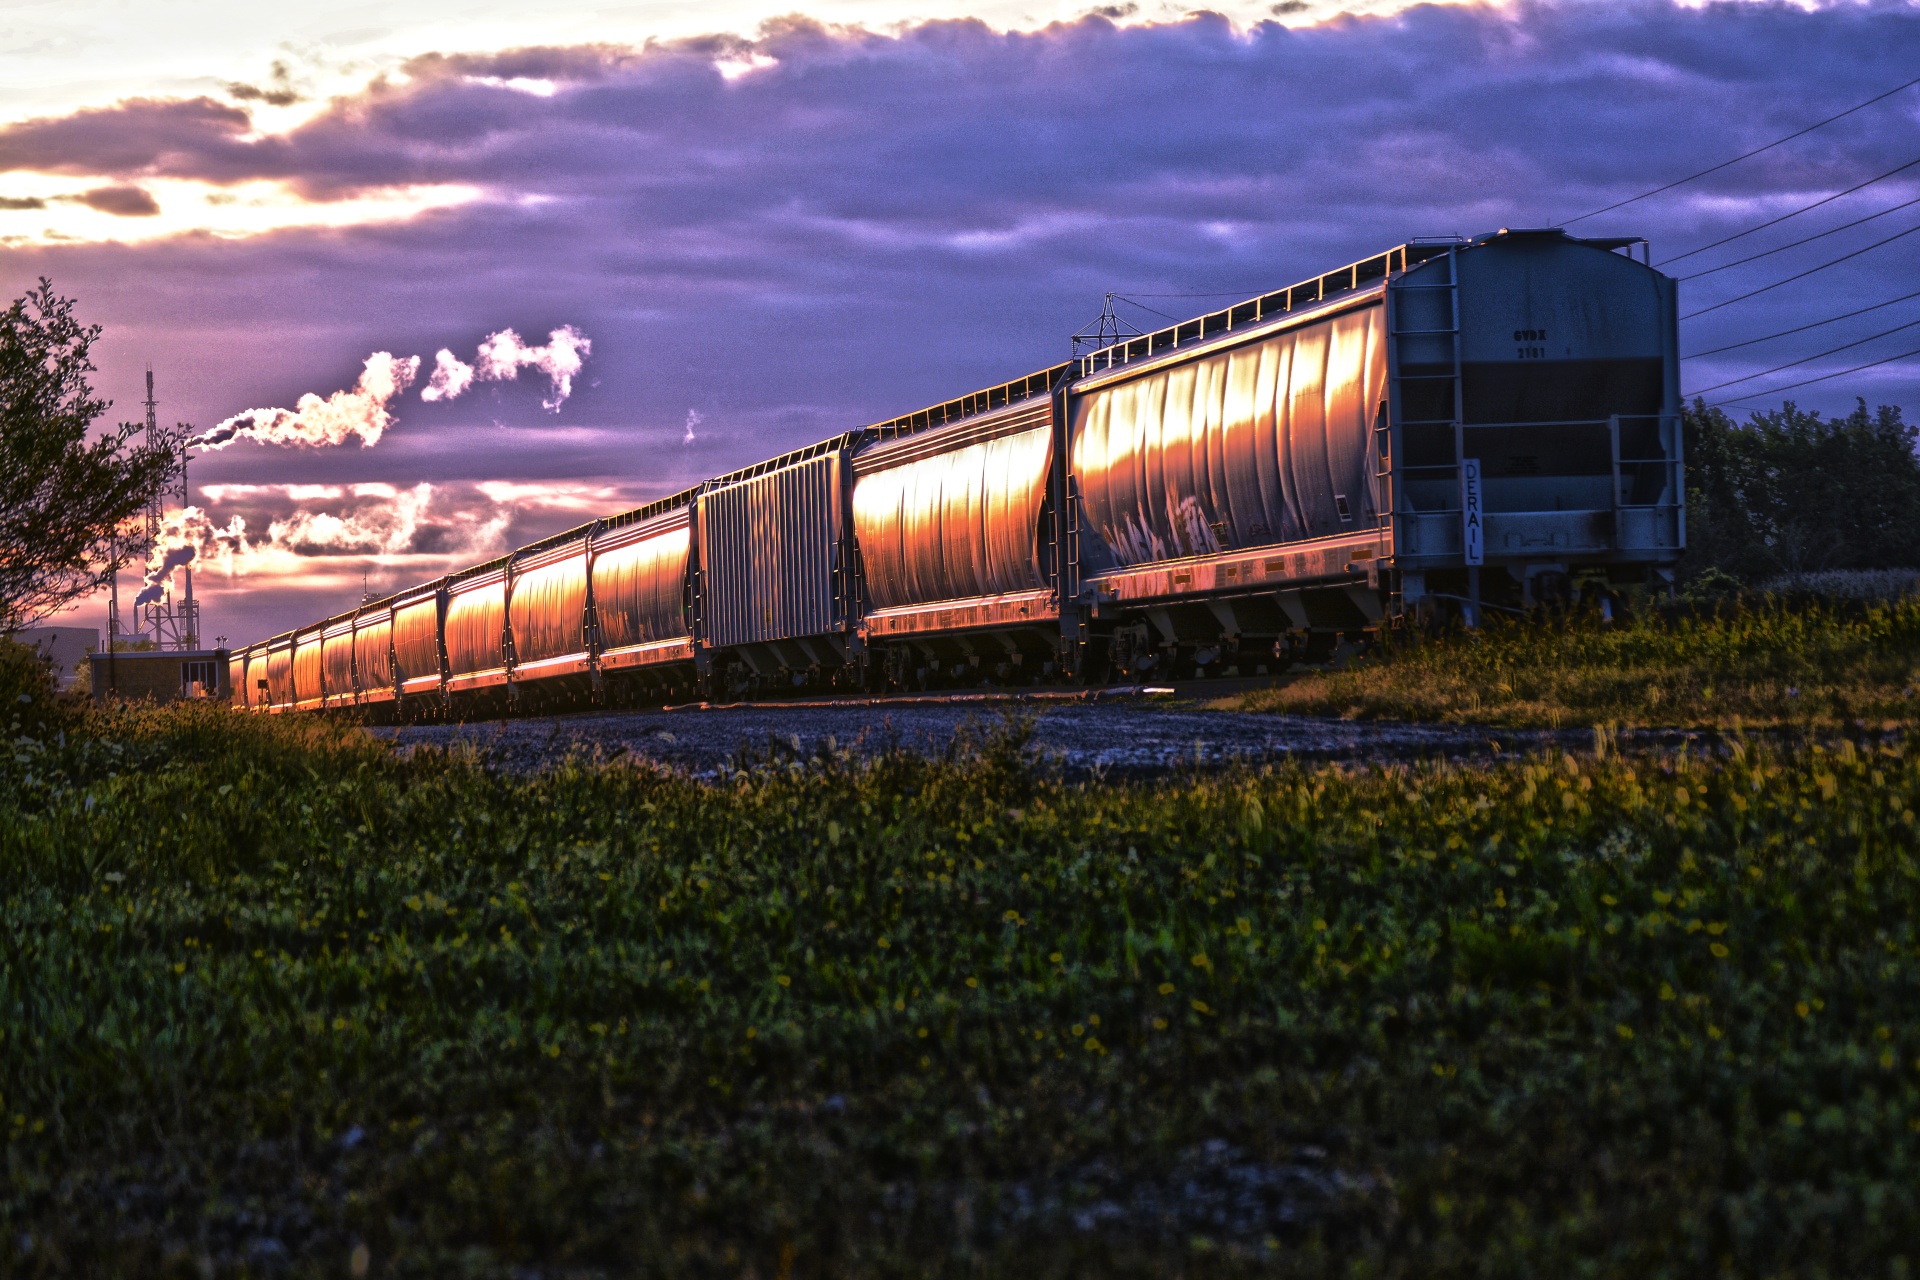 train trains shiny free photo